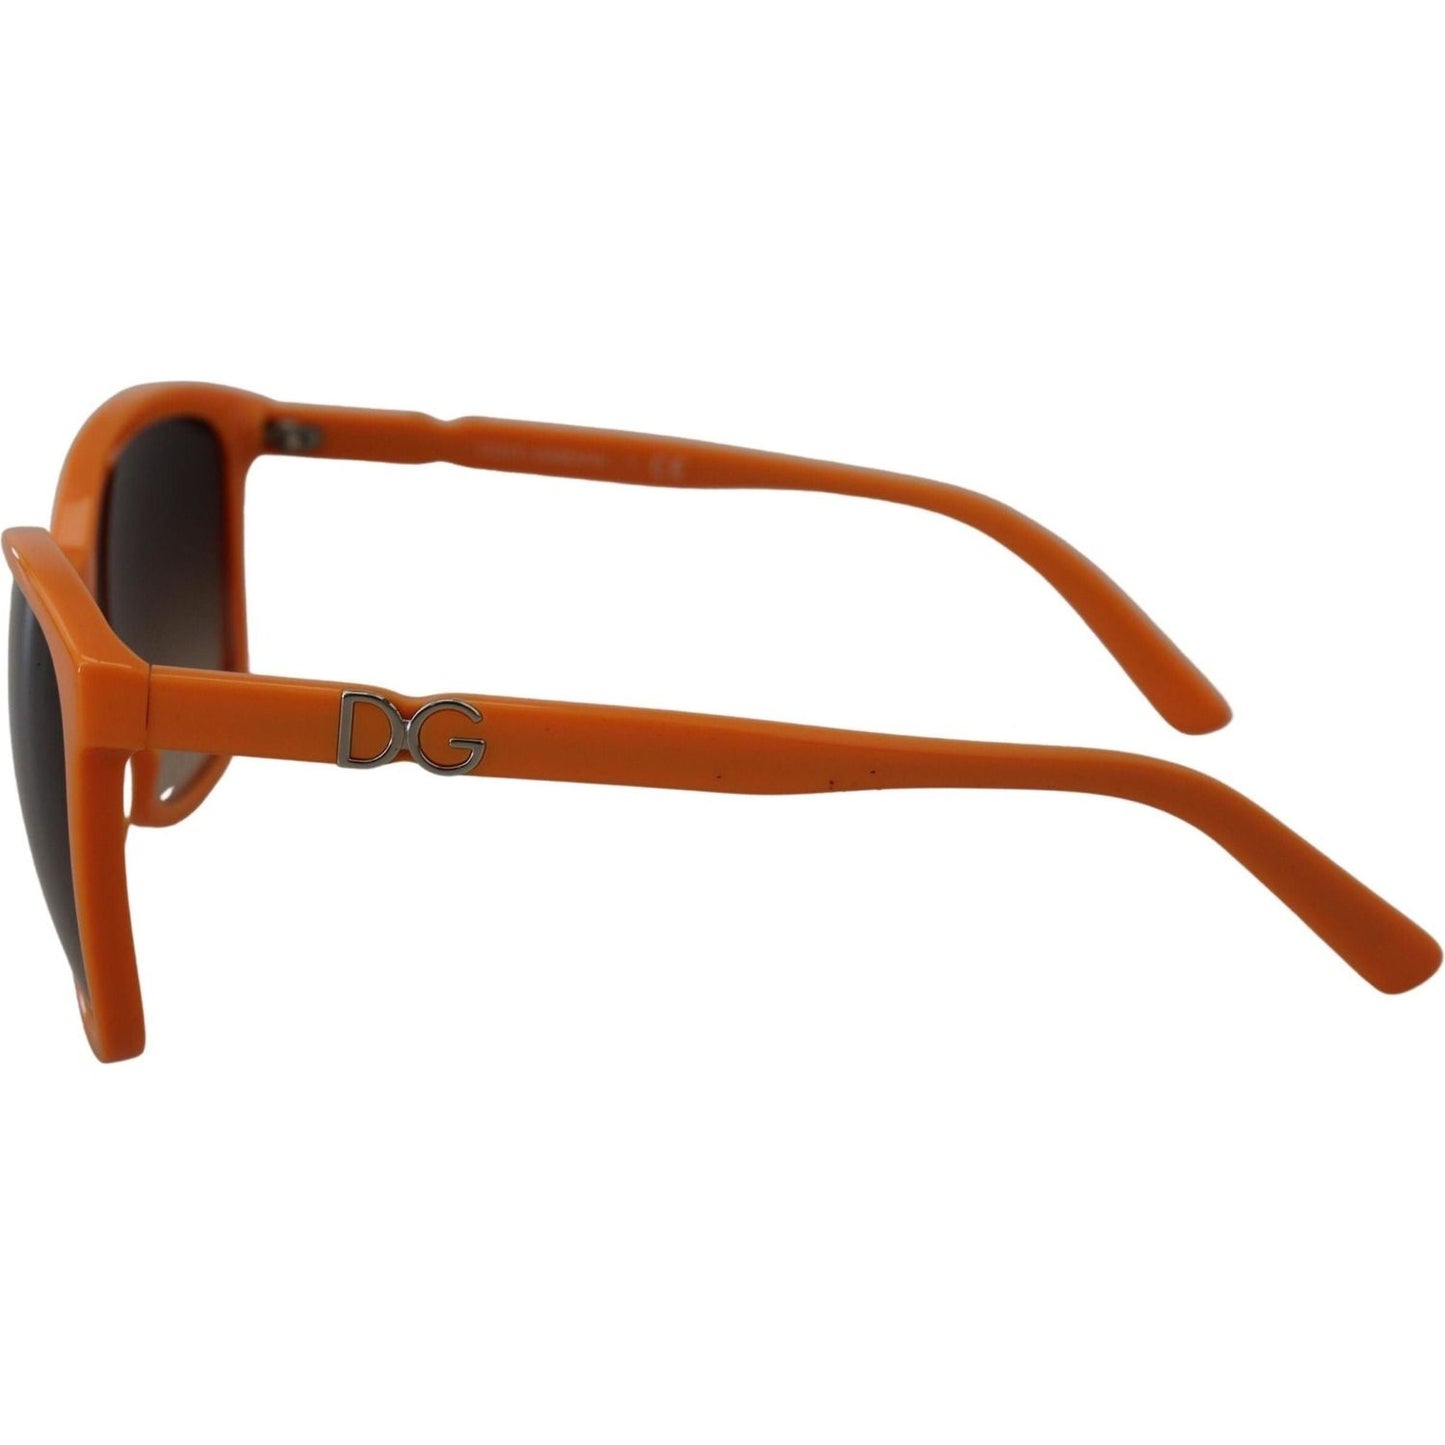 Dolce & Gabbana Chic Orange Round Sunglasses for Women orange-acetate-frame-round-shades-dg4170pm-sunglasses IMG_4510-1-scaled-8fb0ba3f-a68.jpg